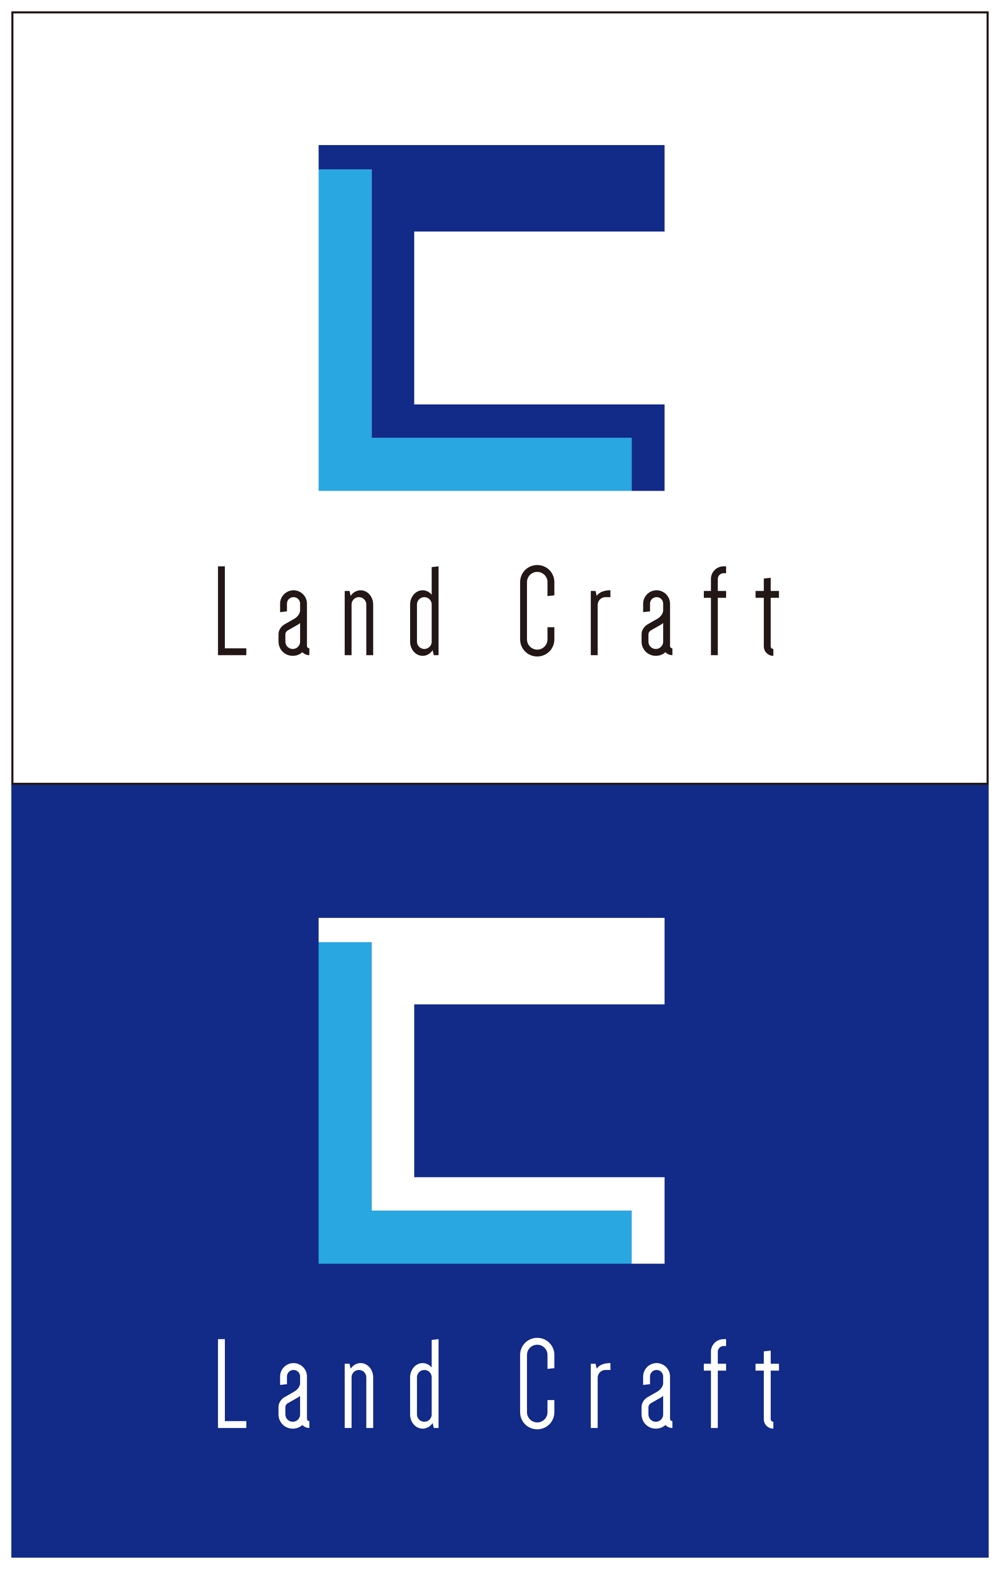 Land Craft-002.jpg